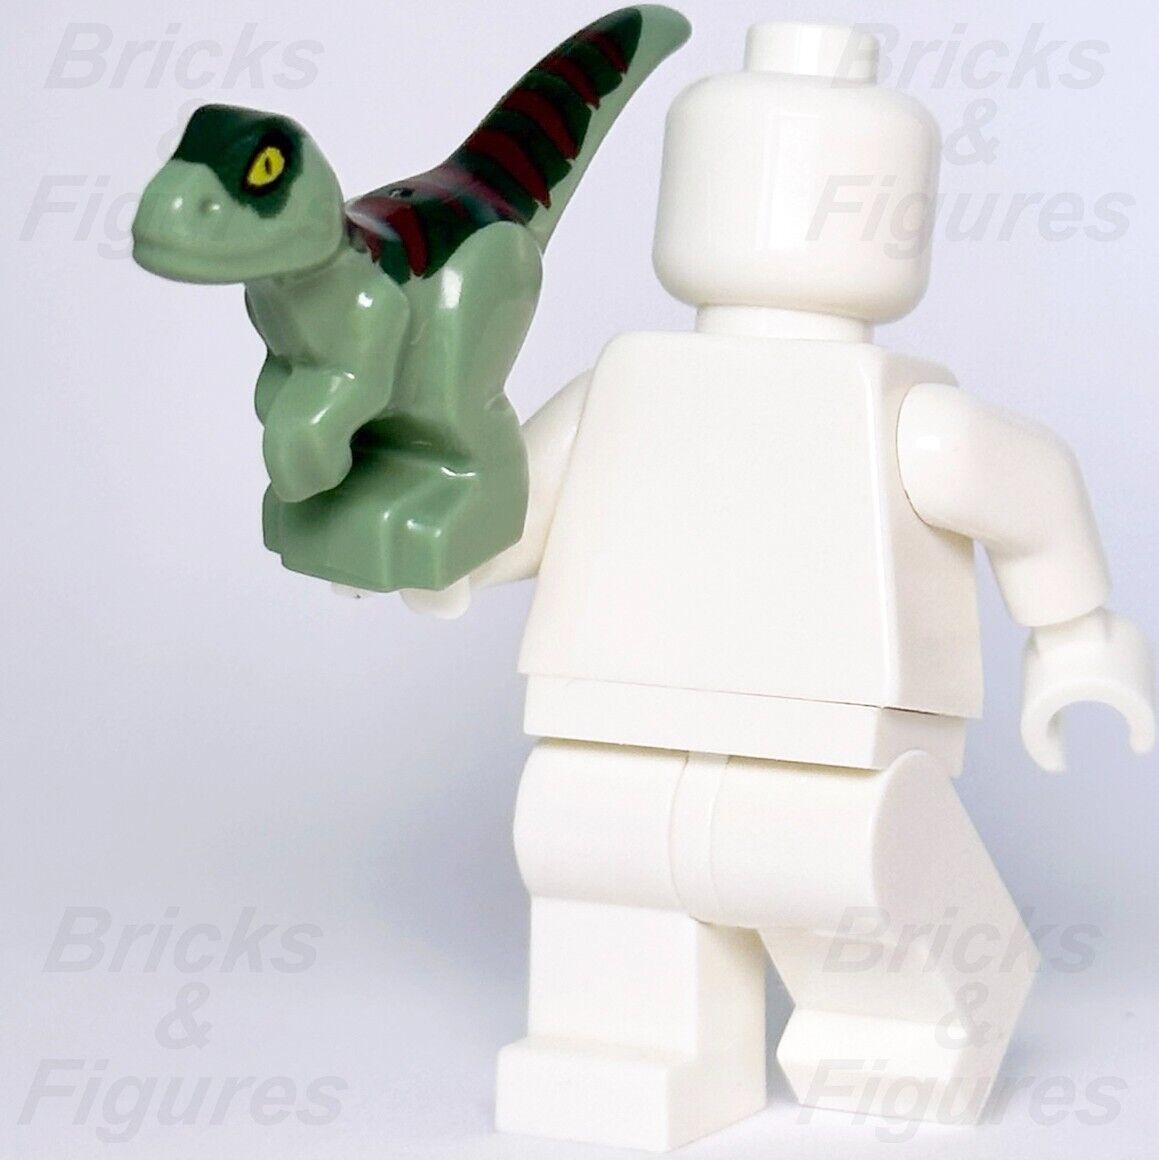 Jurassic World LEGO Baby Raptor Dinosaur Minifigure Part 76945 Green & Dark Red - Bricks & Figures